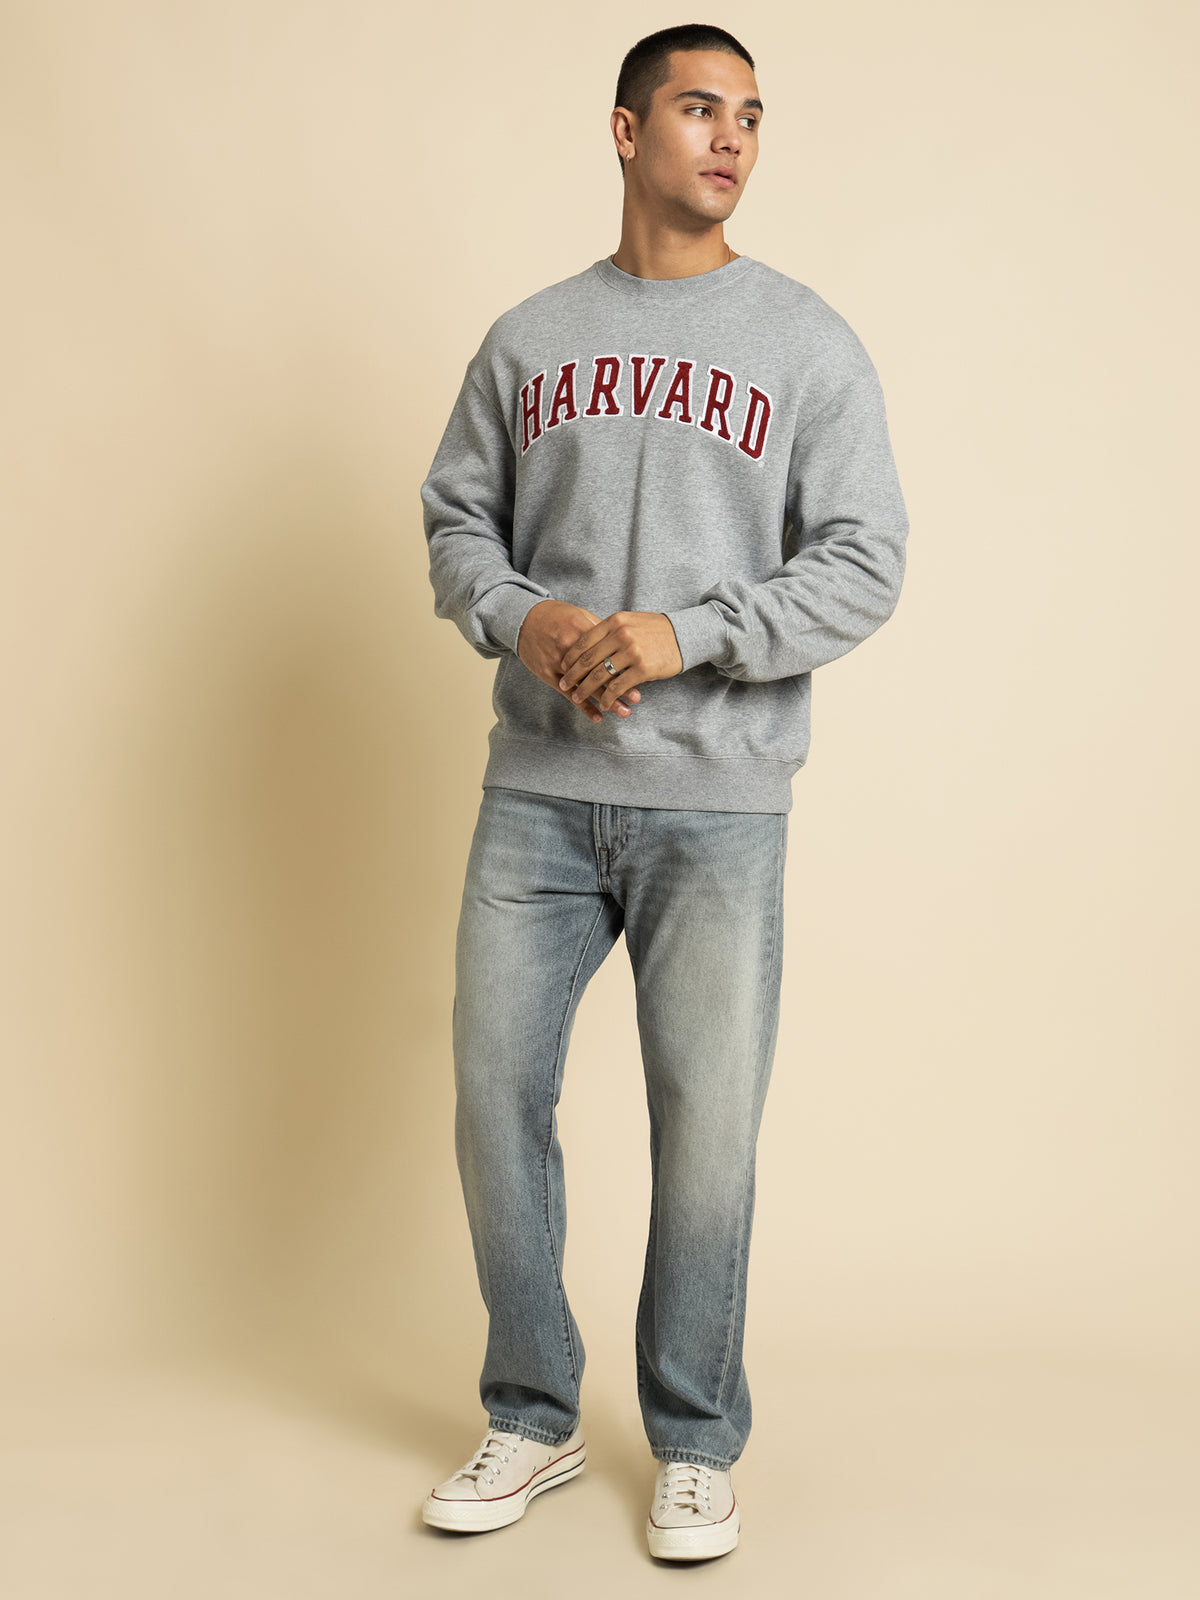 Harvard University Crew in Grey Marle